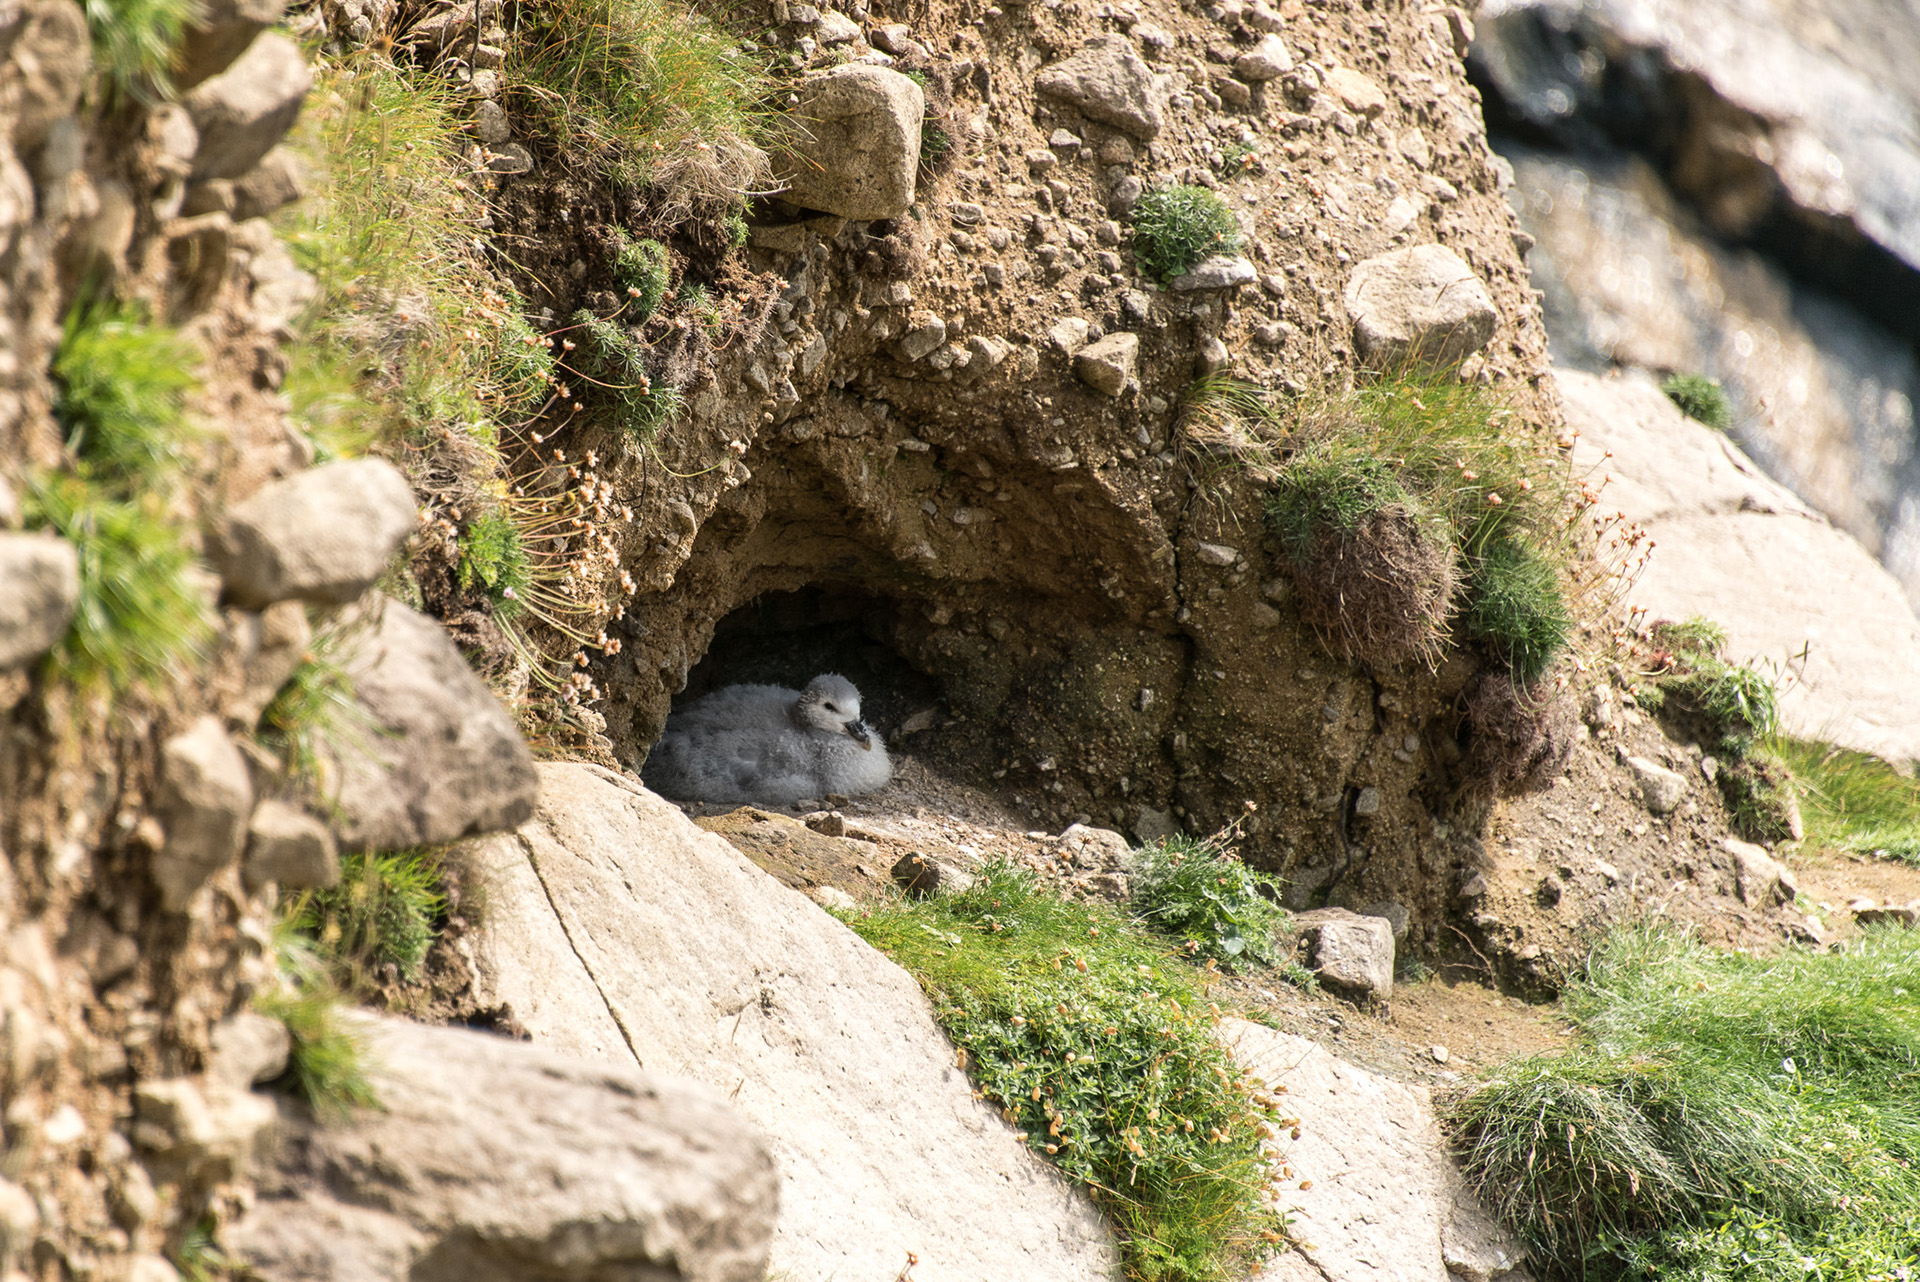 Nesting seabird in the Scottish cliffs